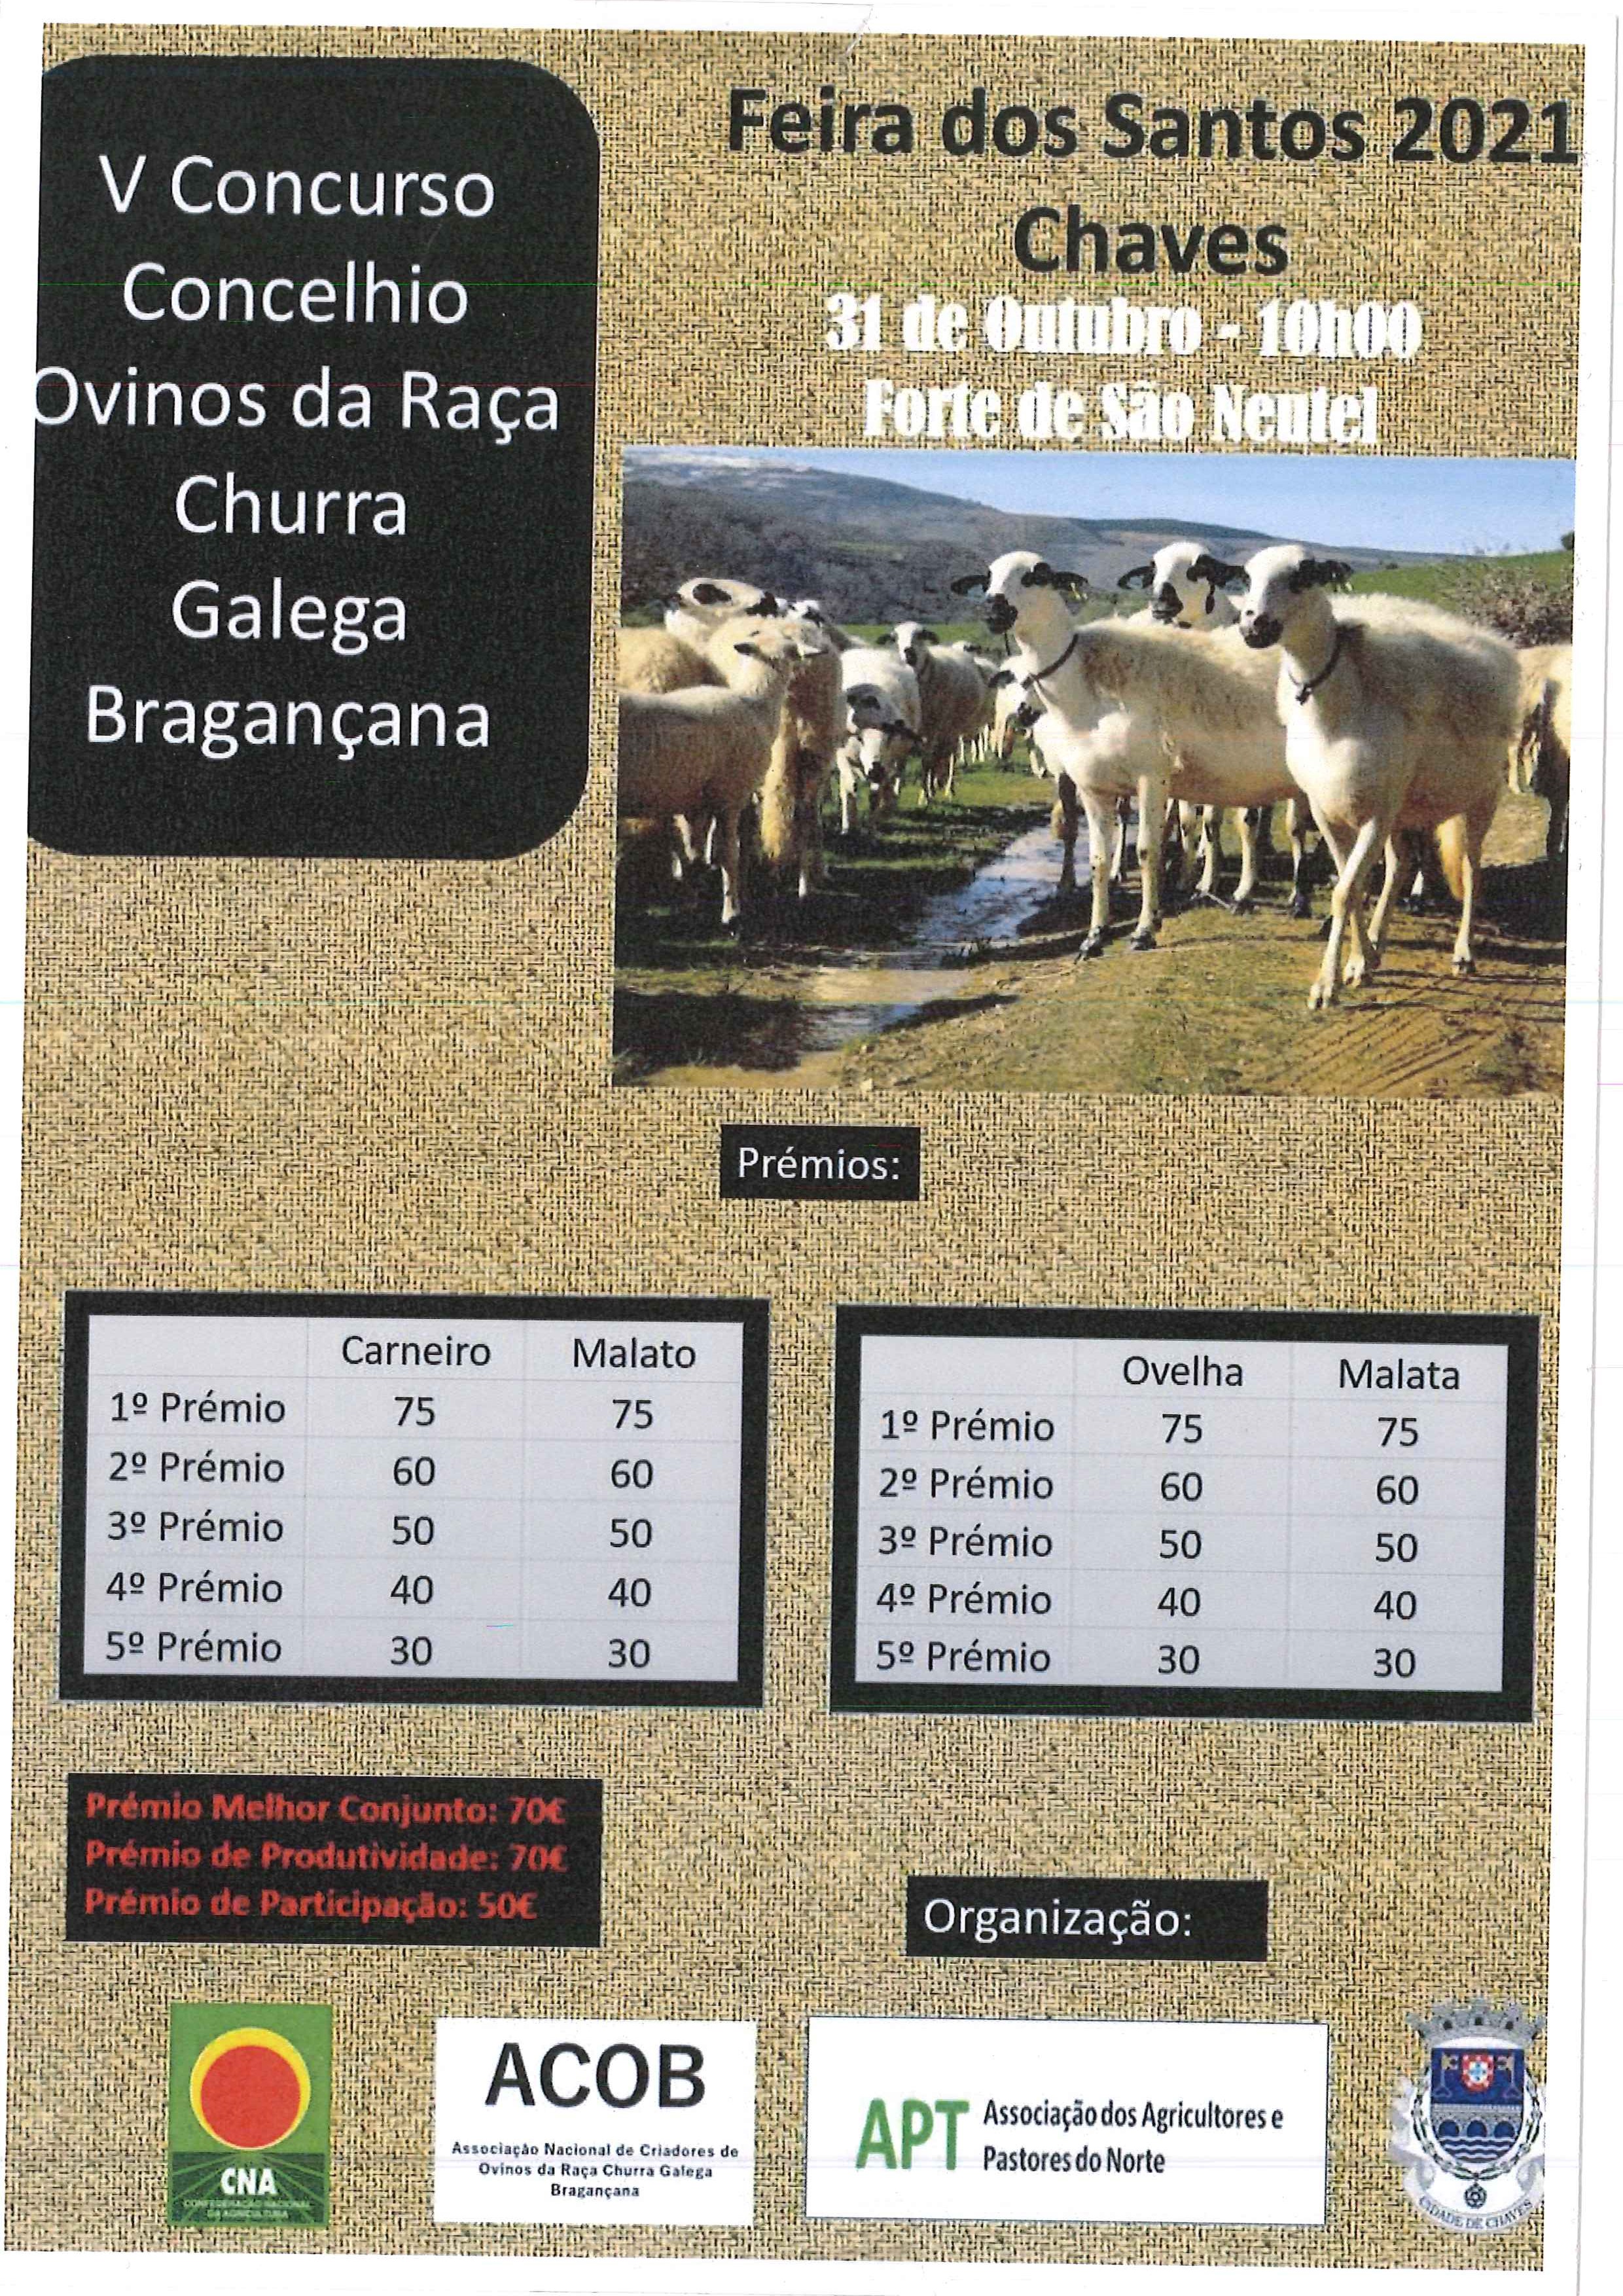 V Concurso Bragança Chaves 2021